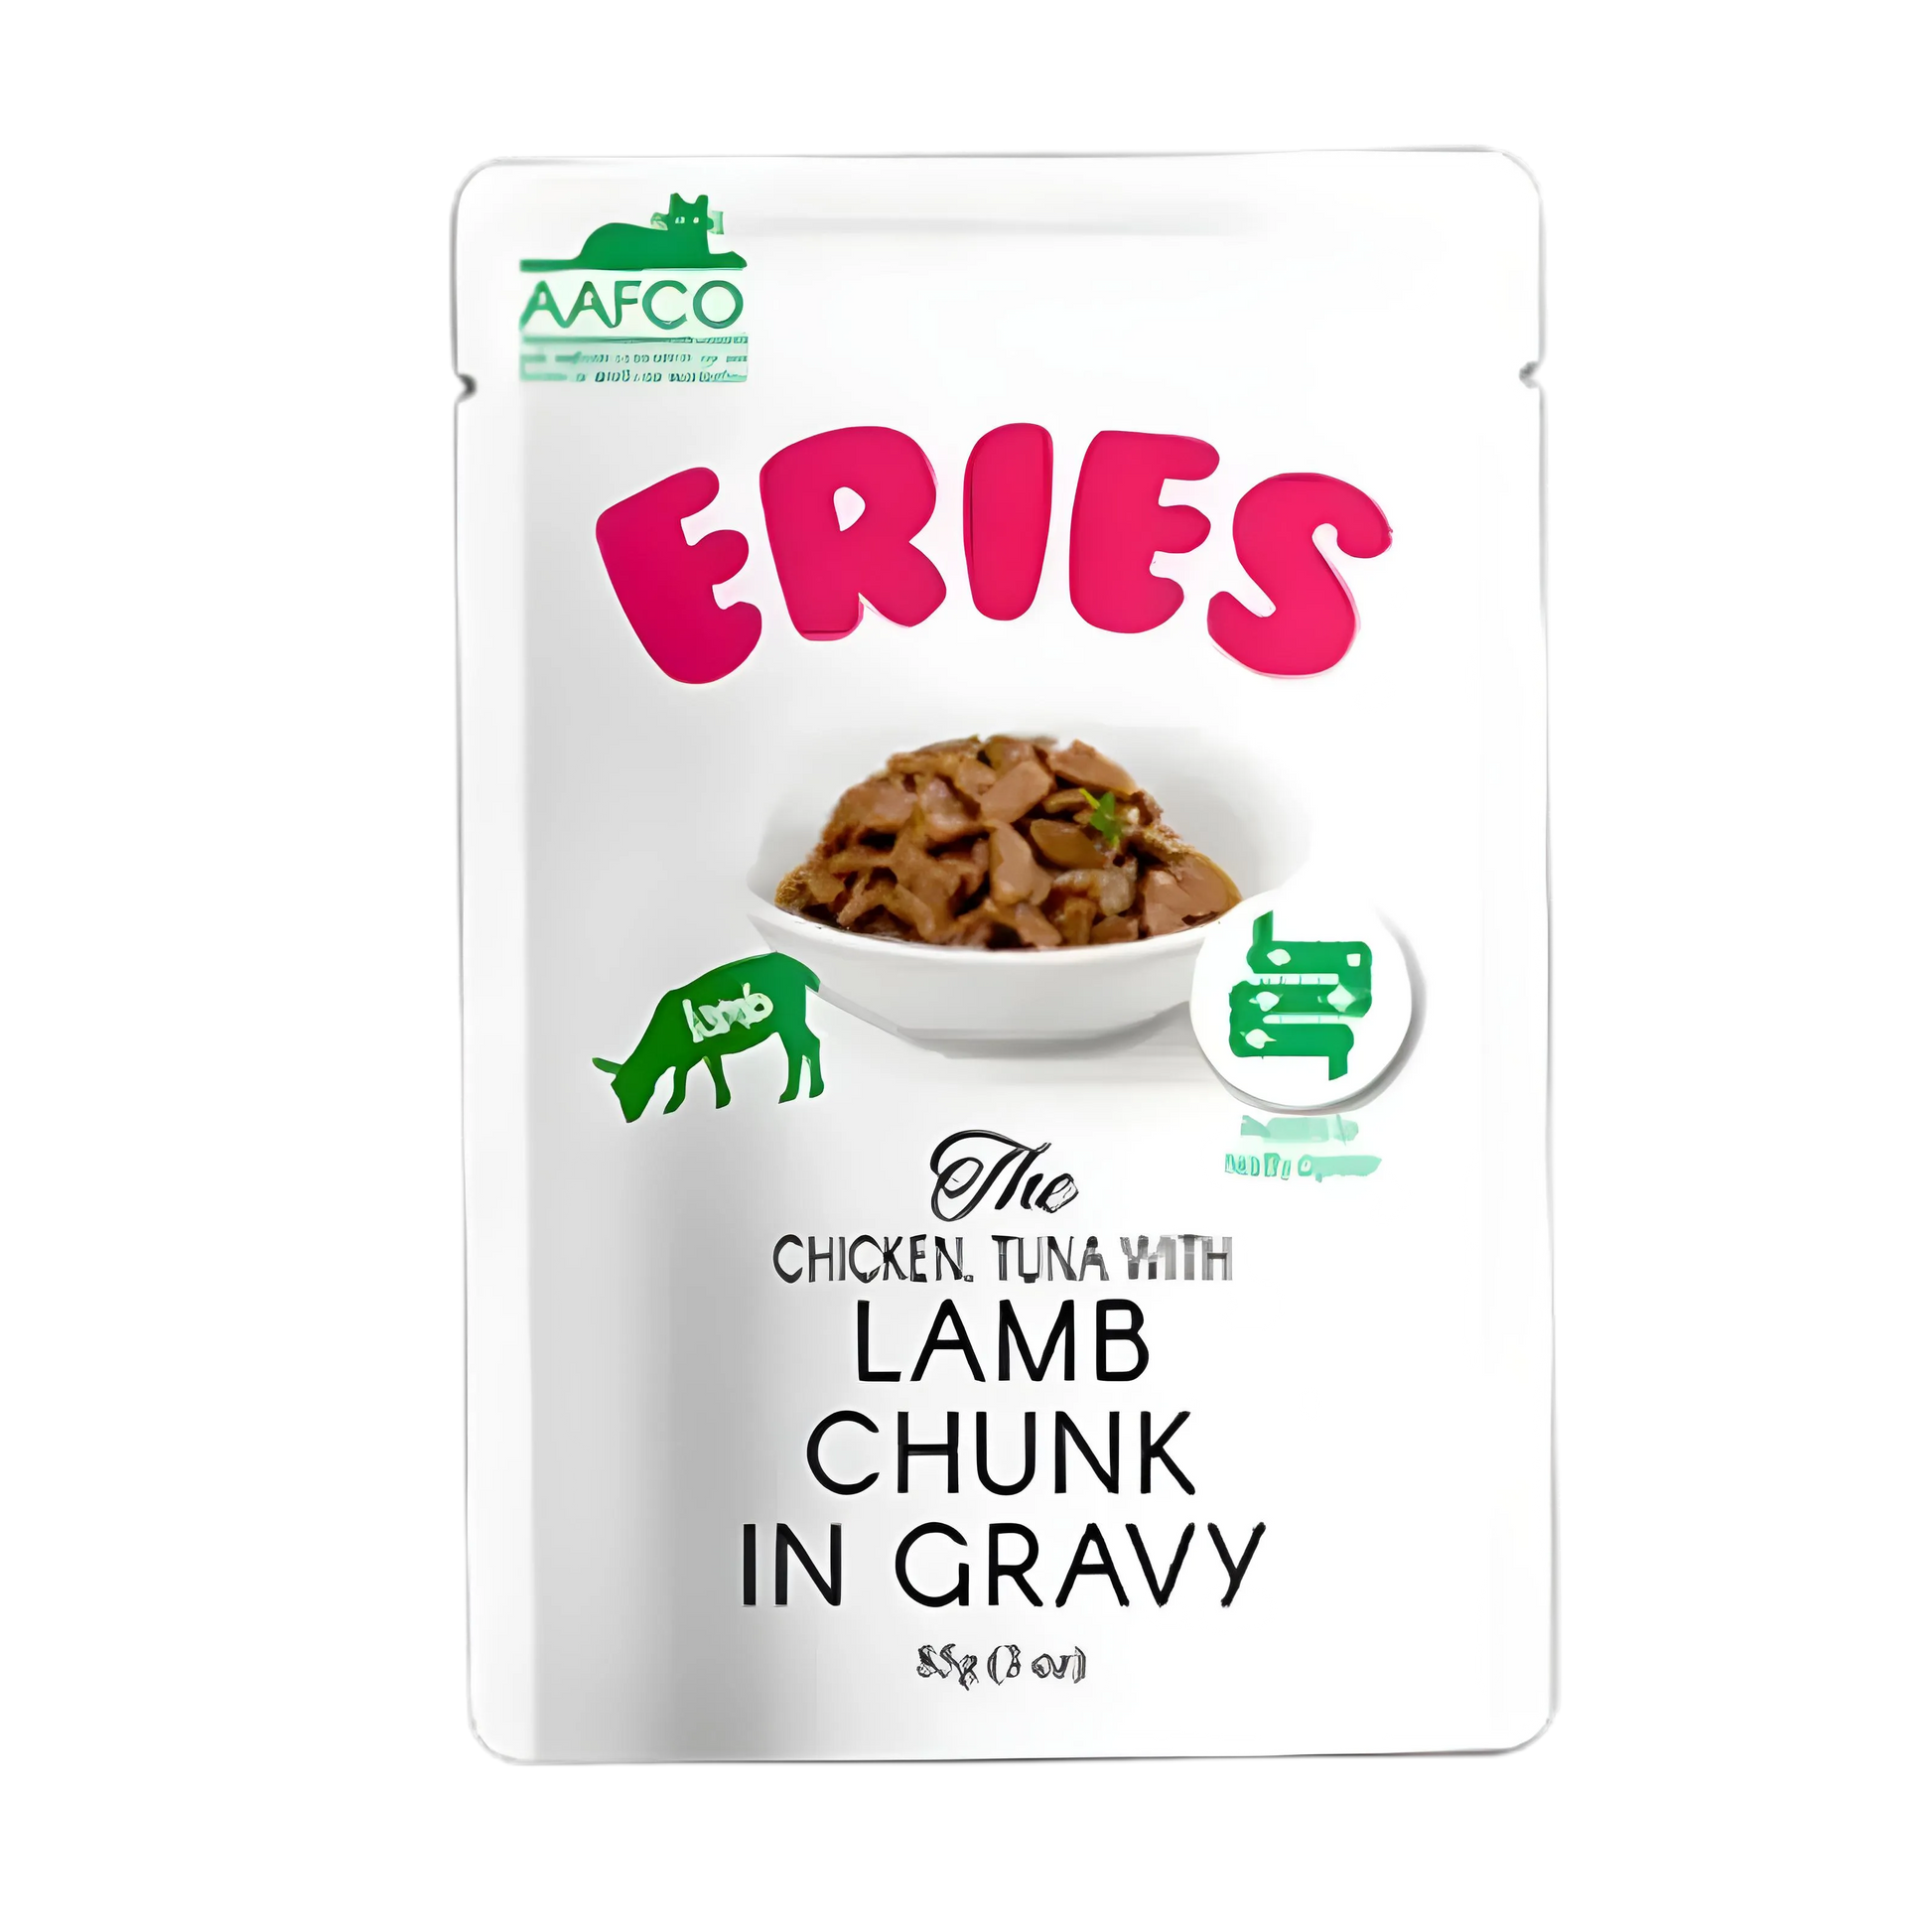 Eries Pouch in Gravy Lamb Chuck 85g x12-Eries-Catsmart-express